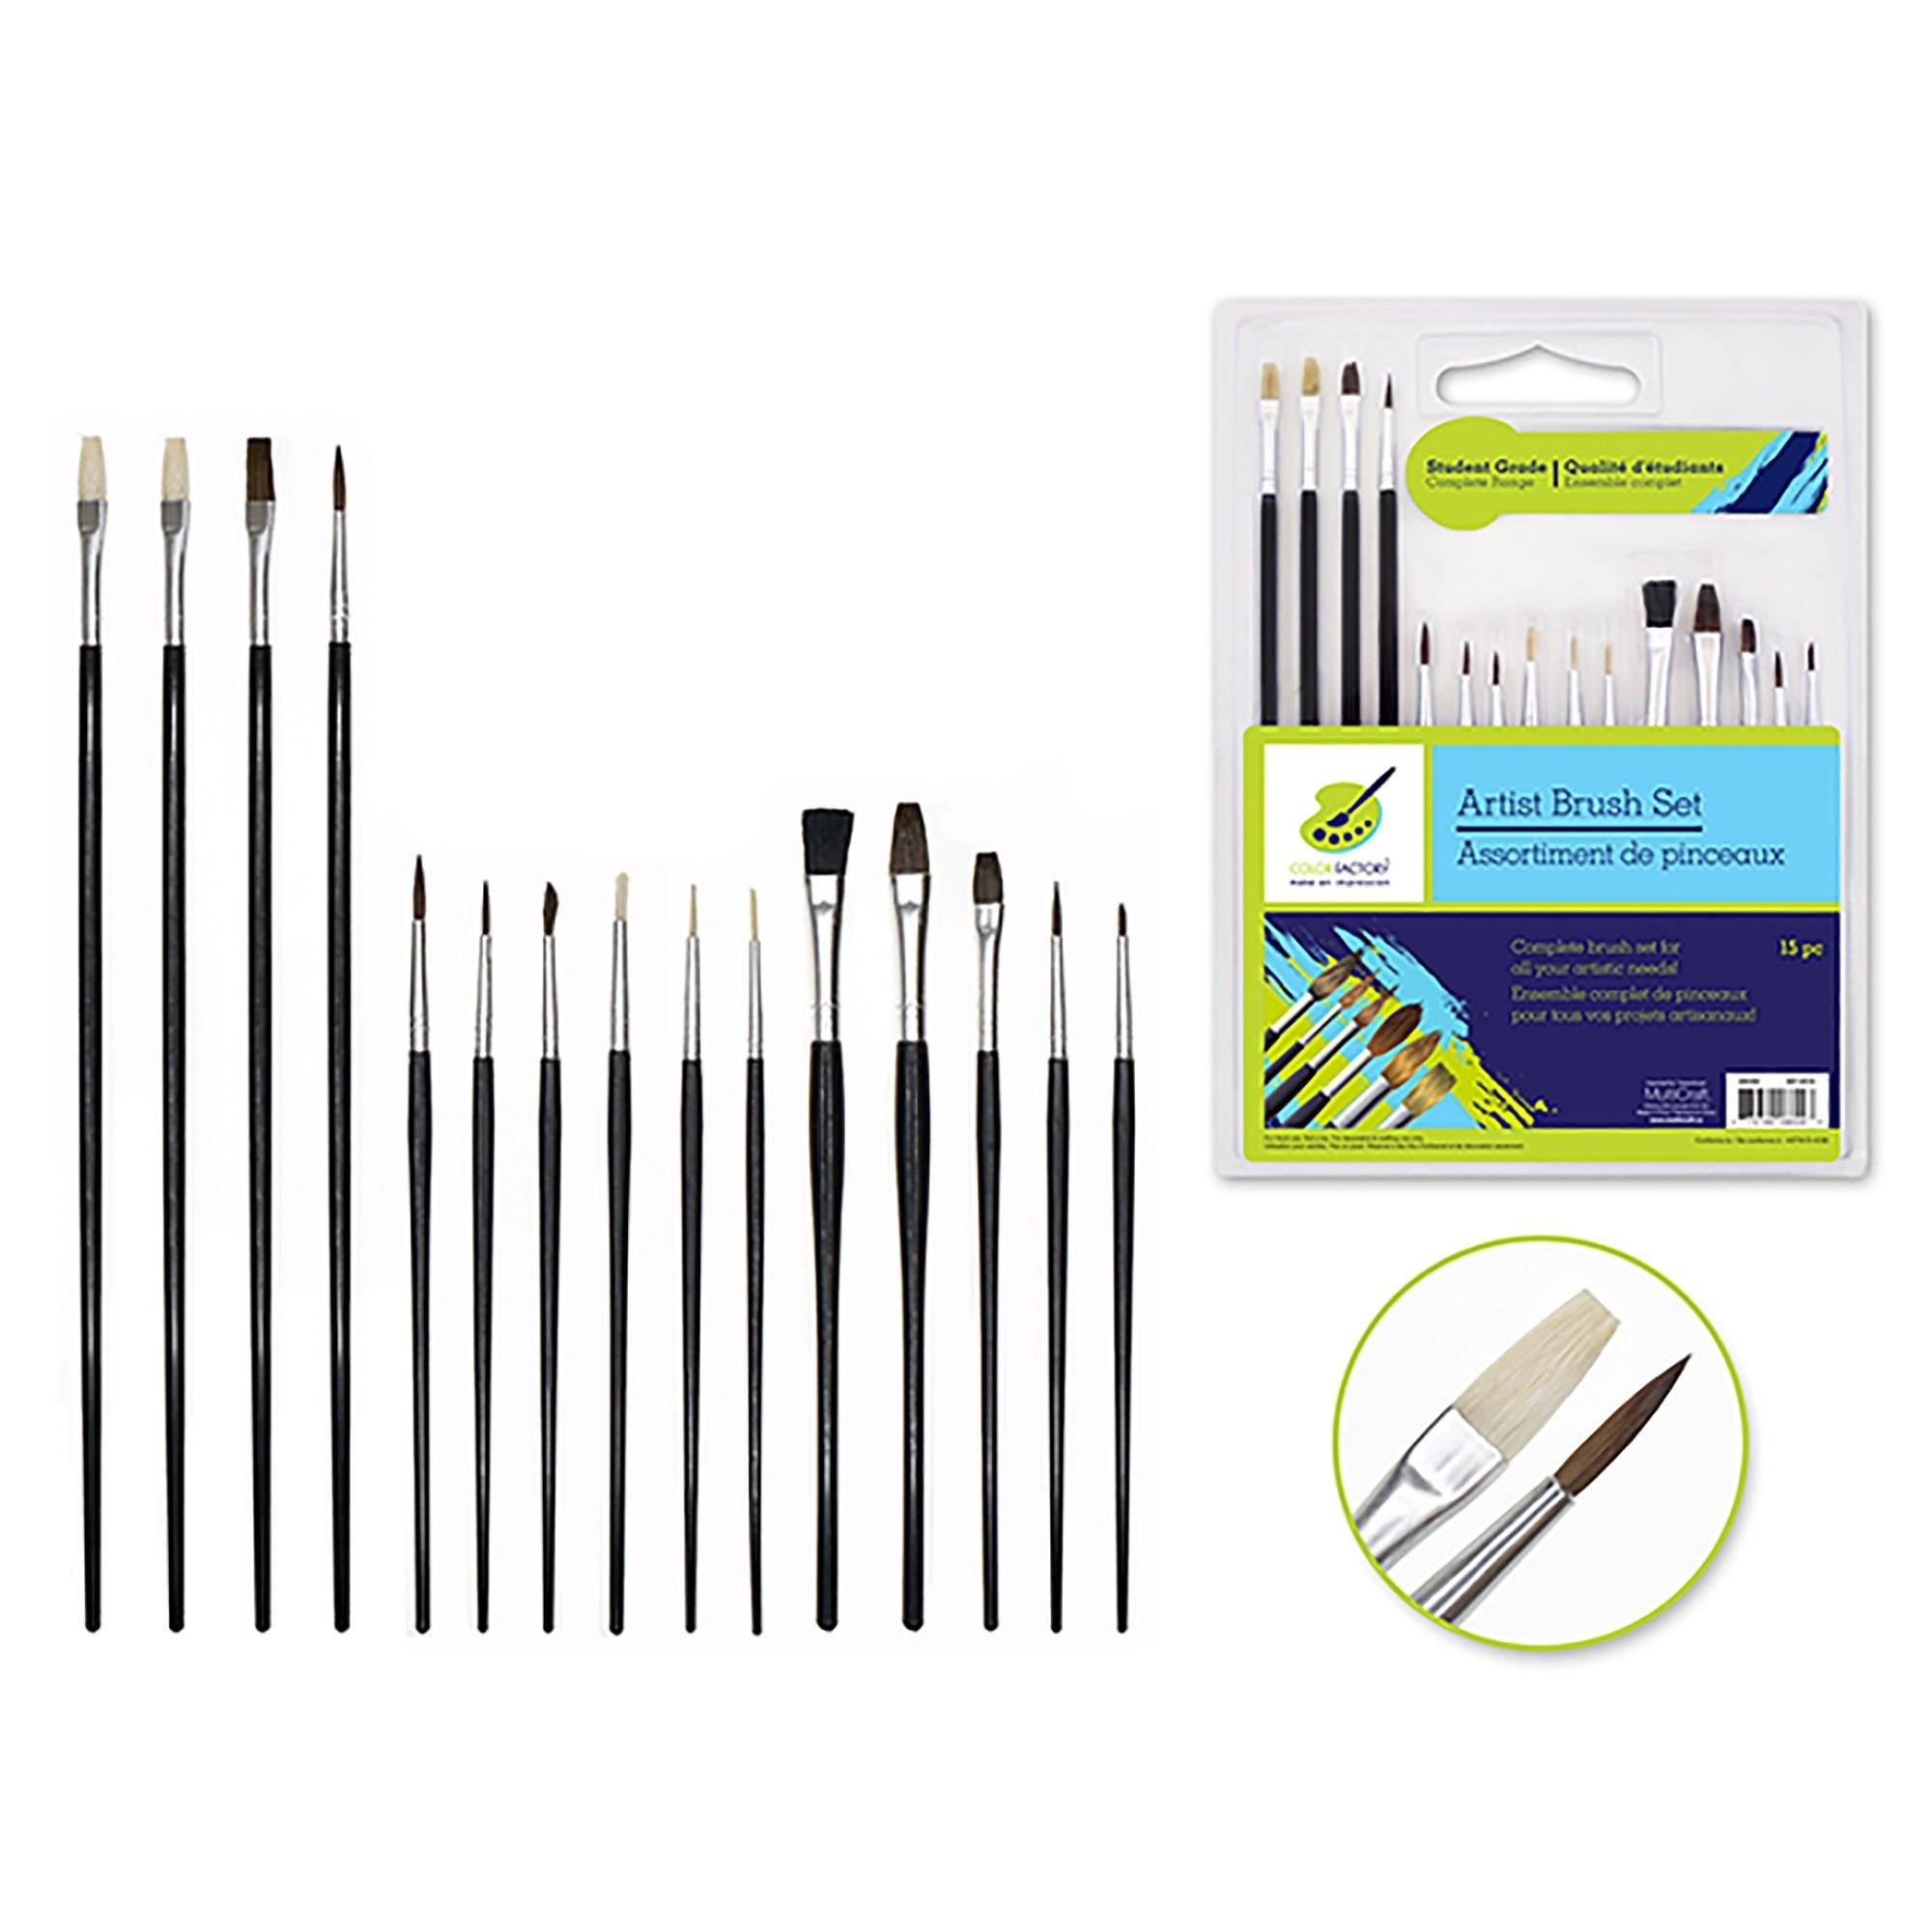 Artist Brush Set: Student Grade X15 Black Handle Complete Range - Dollar Max Dépôt